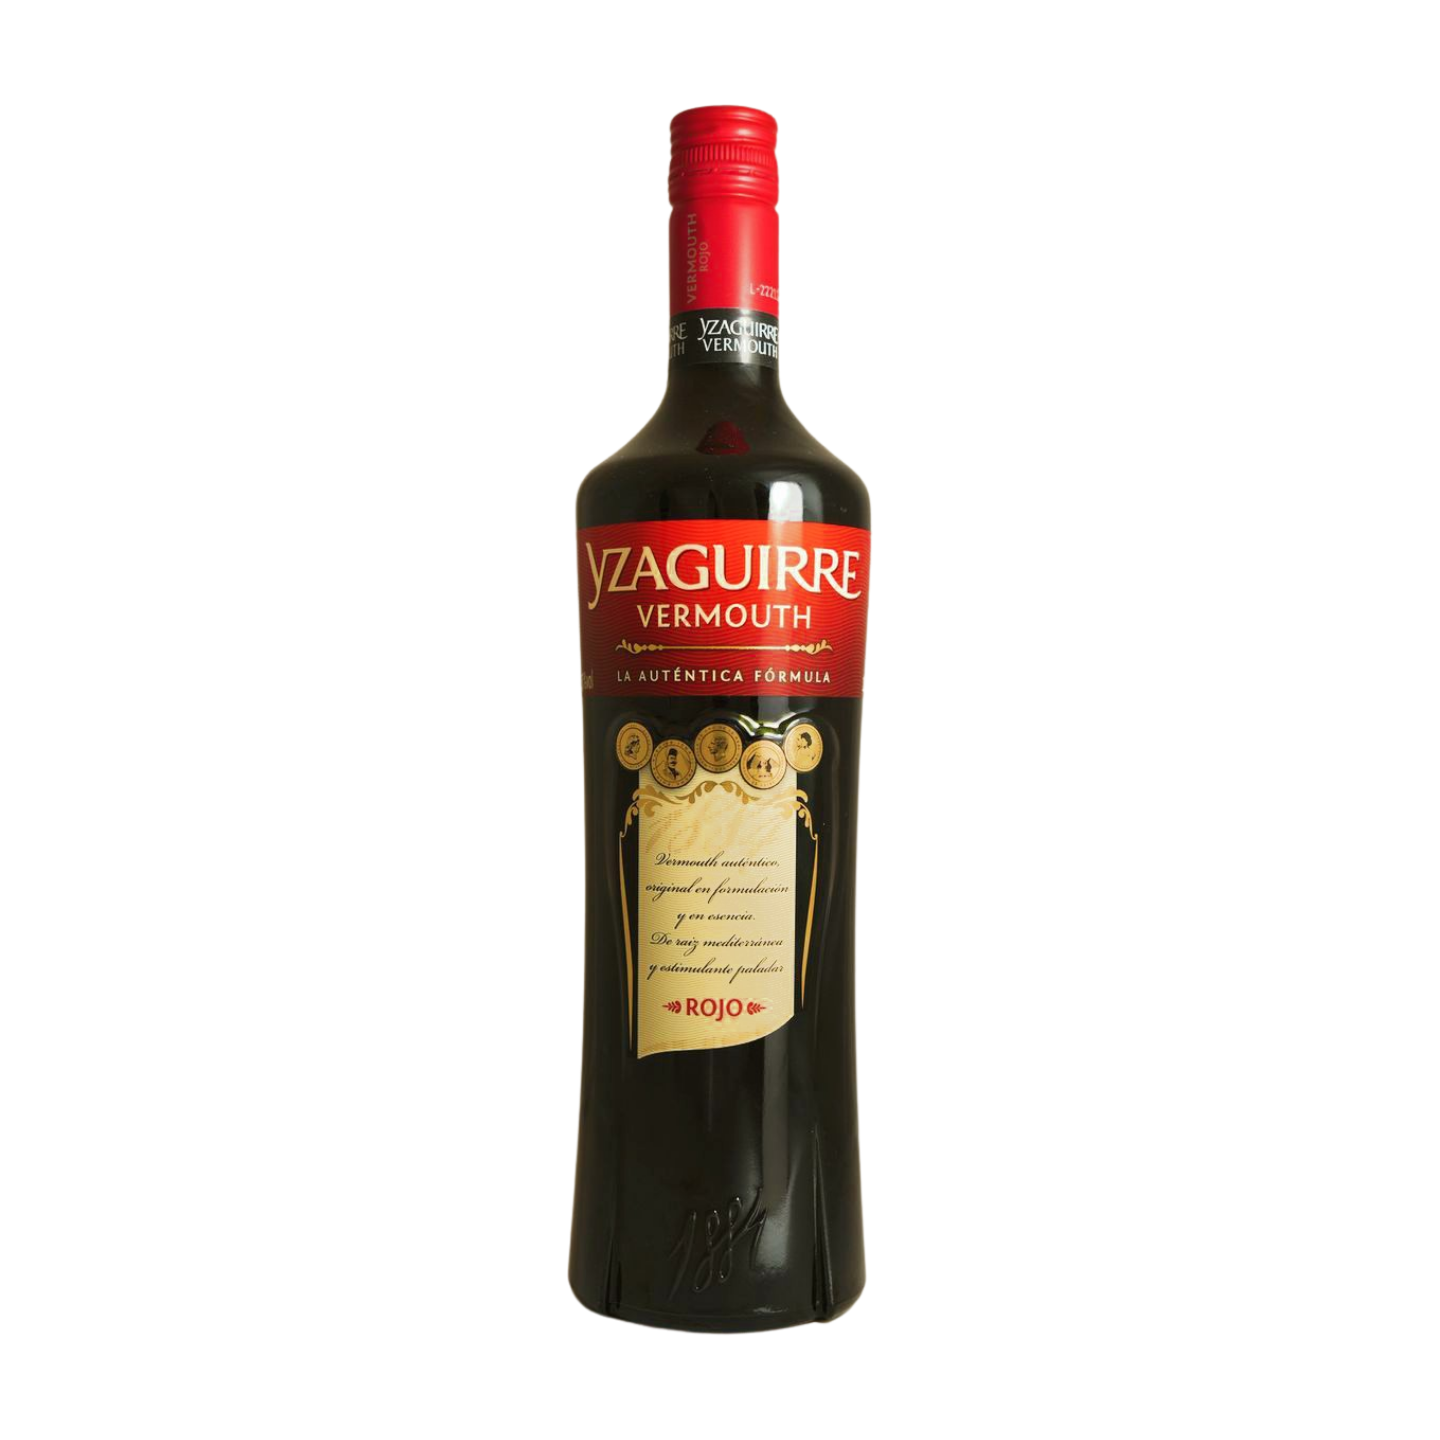 Yzaguirre - Clásico Rojo - Vermouth